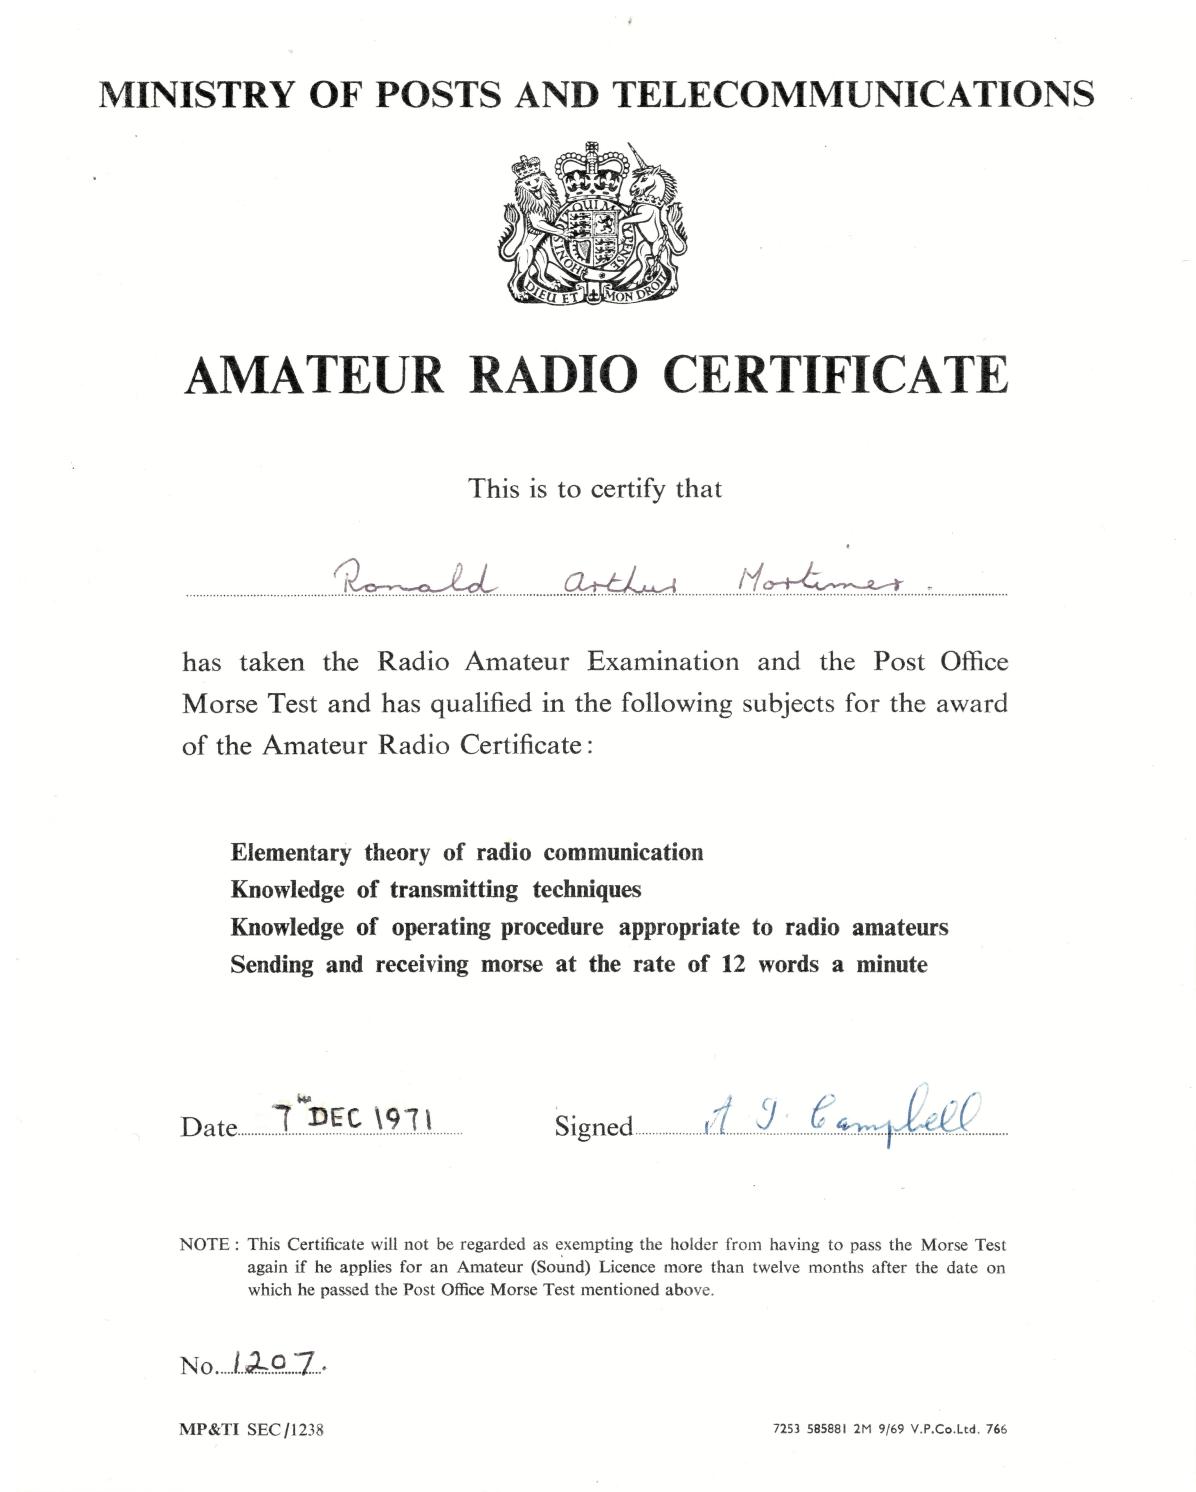 Amateur Radio Certificate - 1971